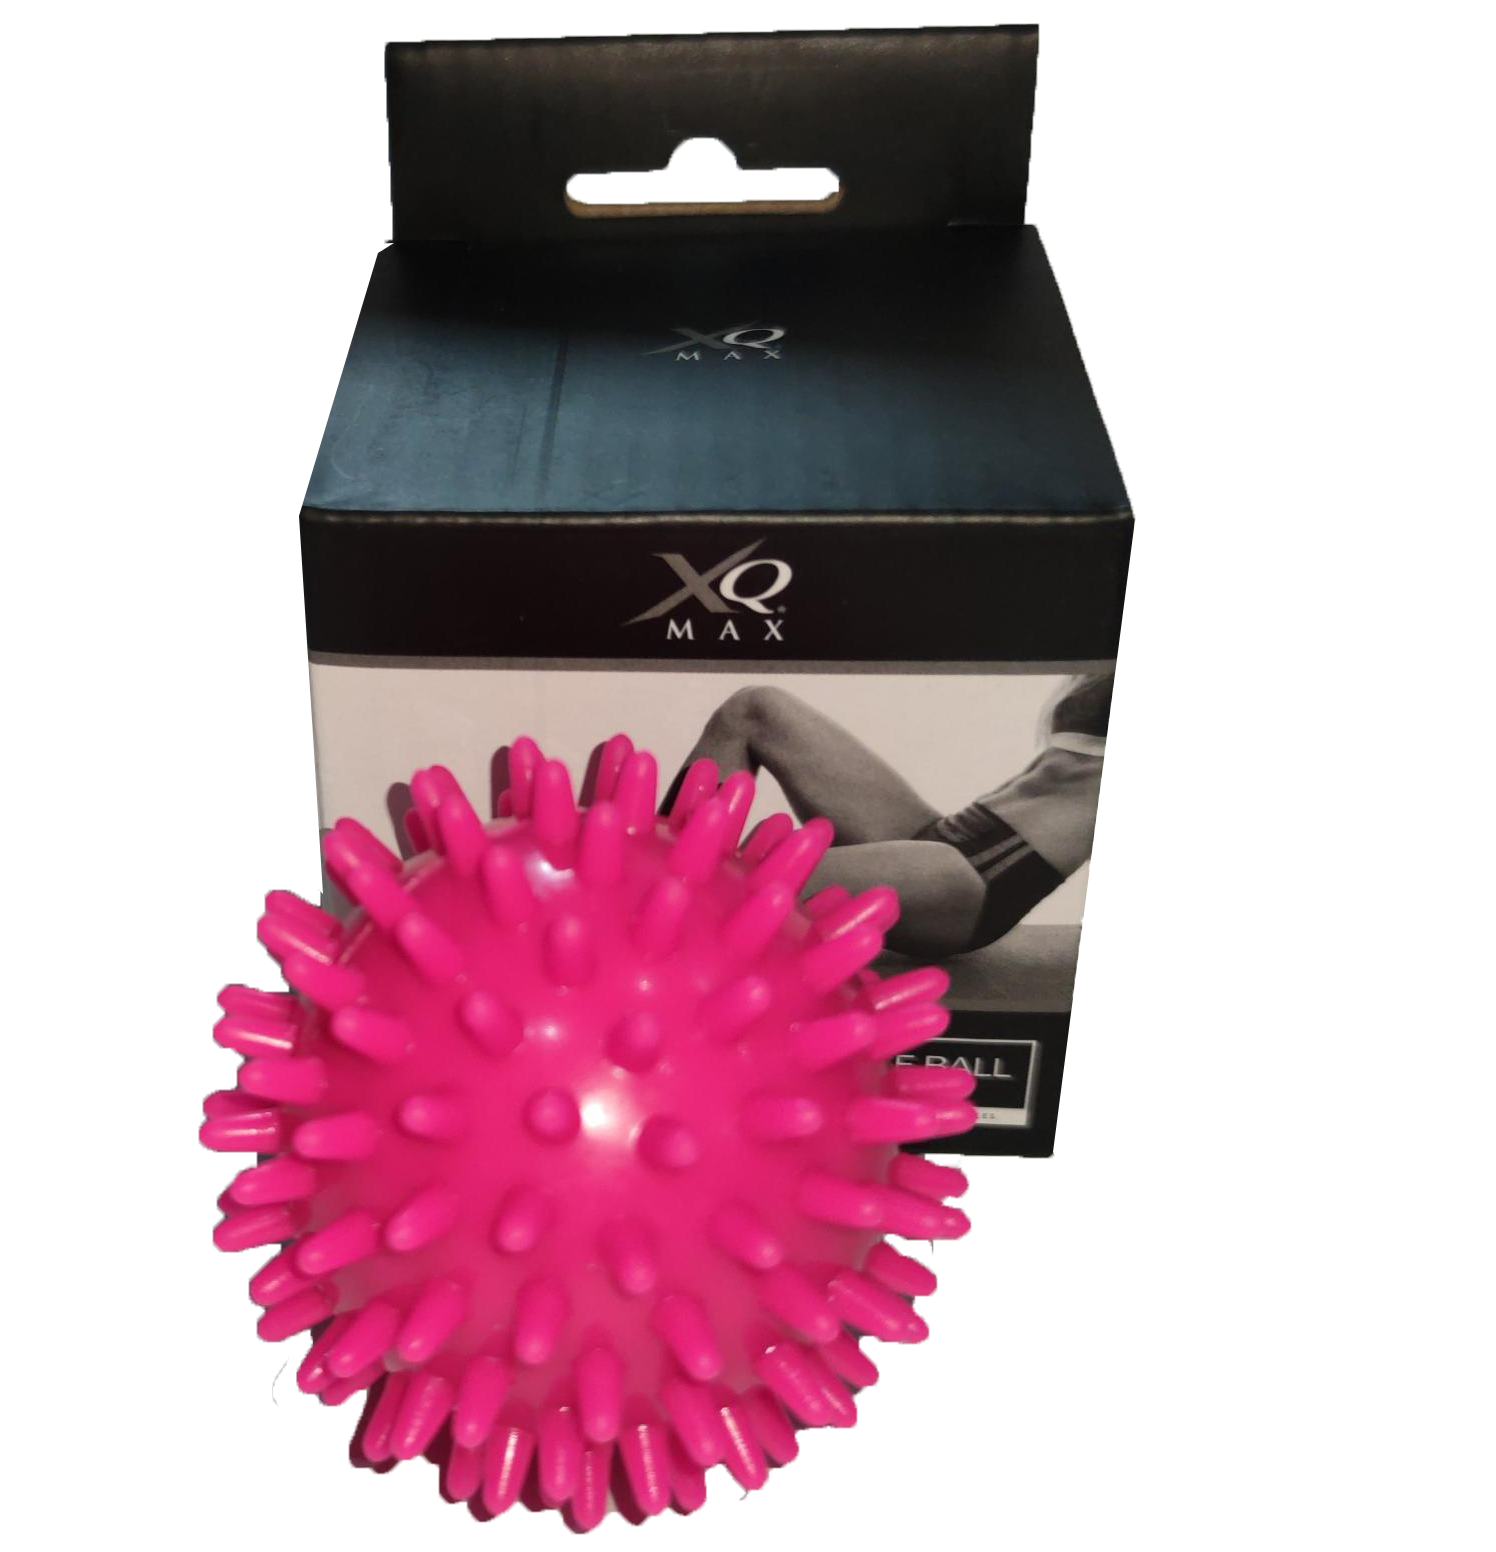 Мяч-массажер с шипами XQ Max, 7 см, розовый (850674) - фото 1